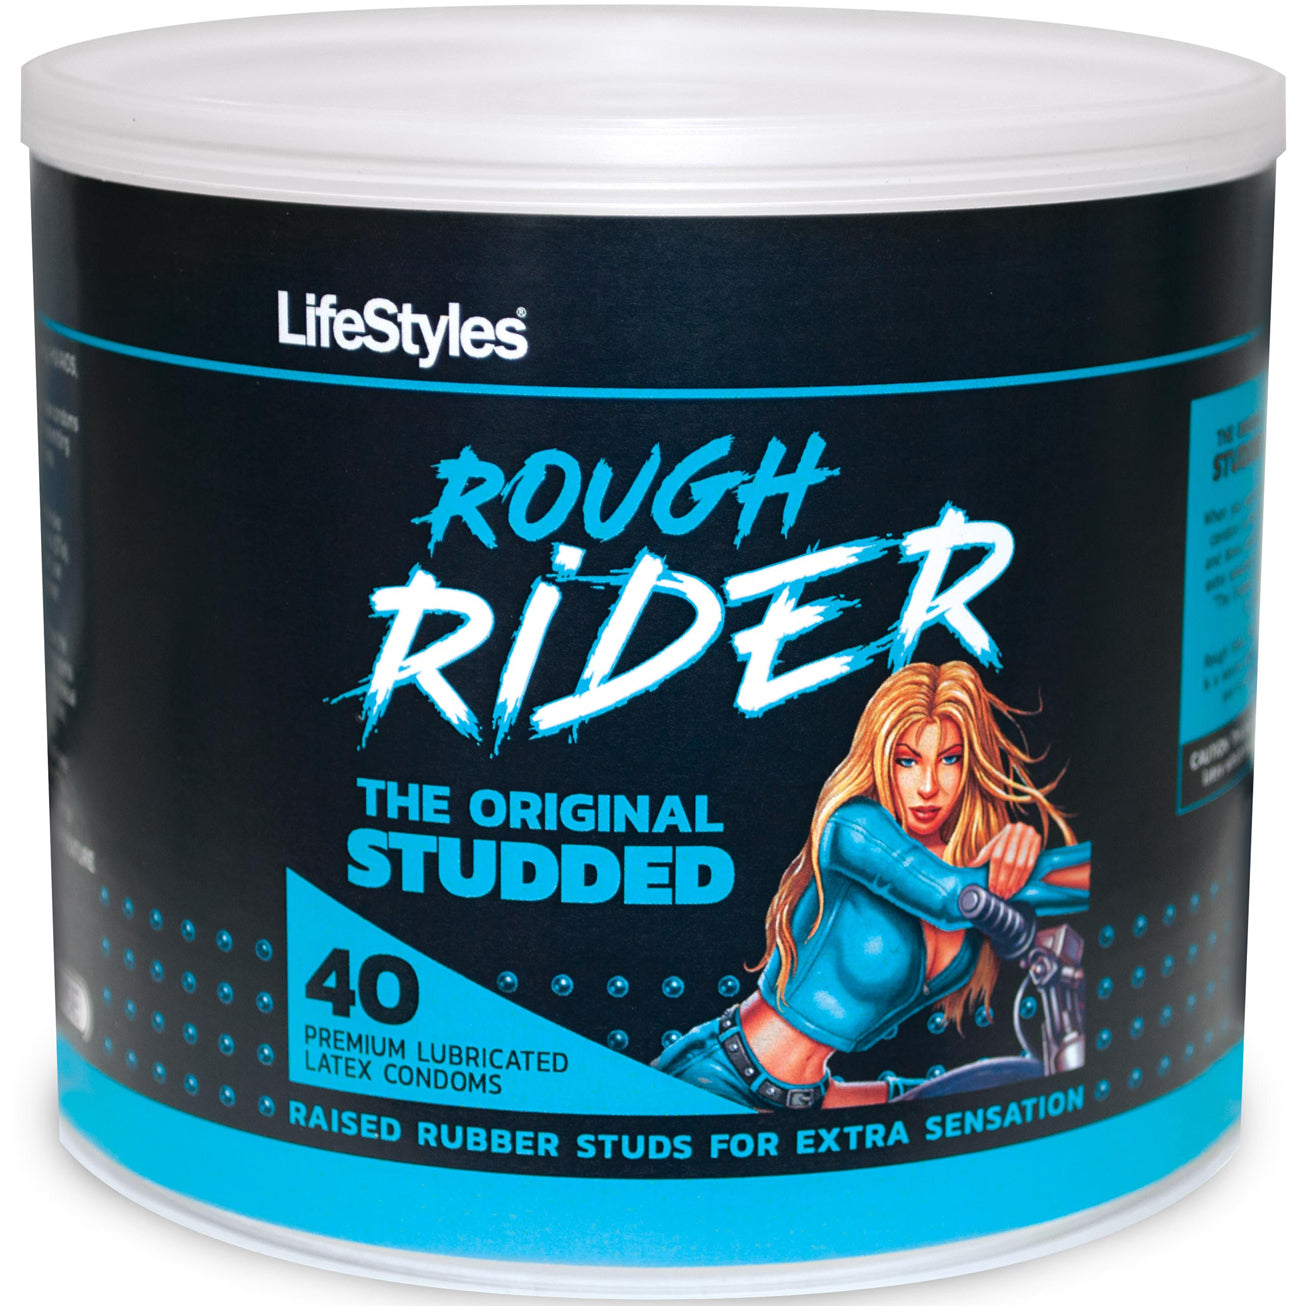 Lifestyles Rough Rider 40 Count Jar